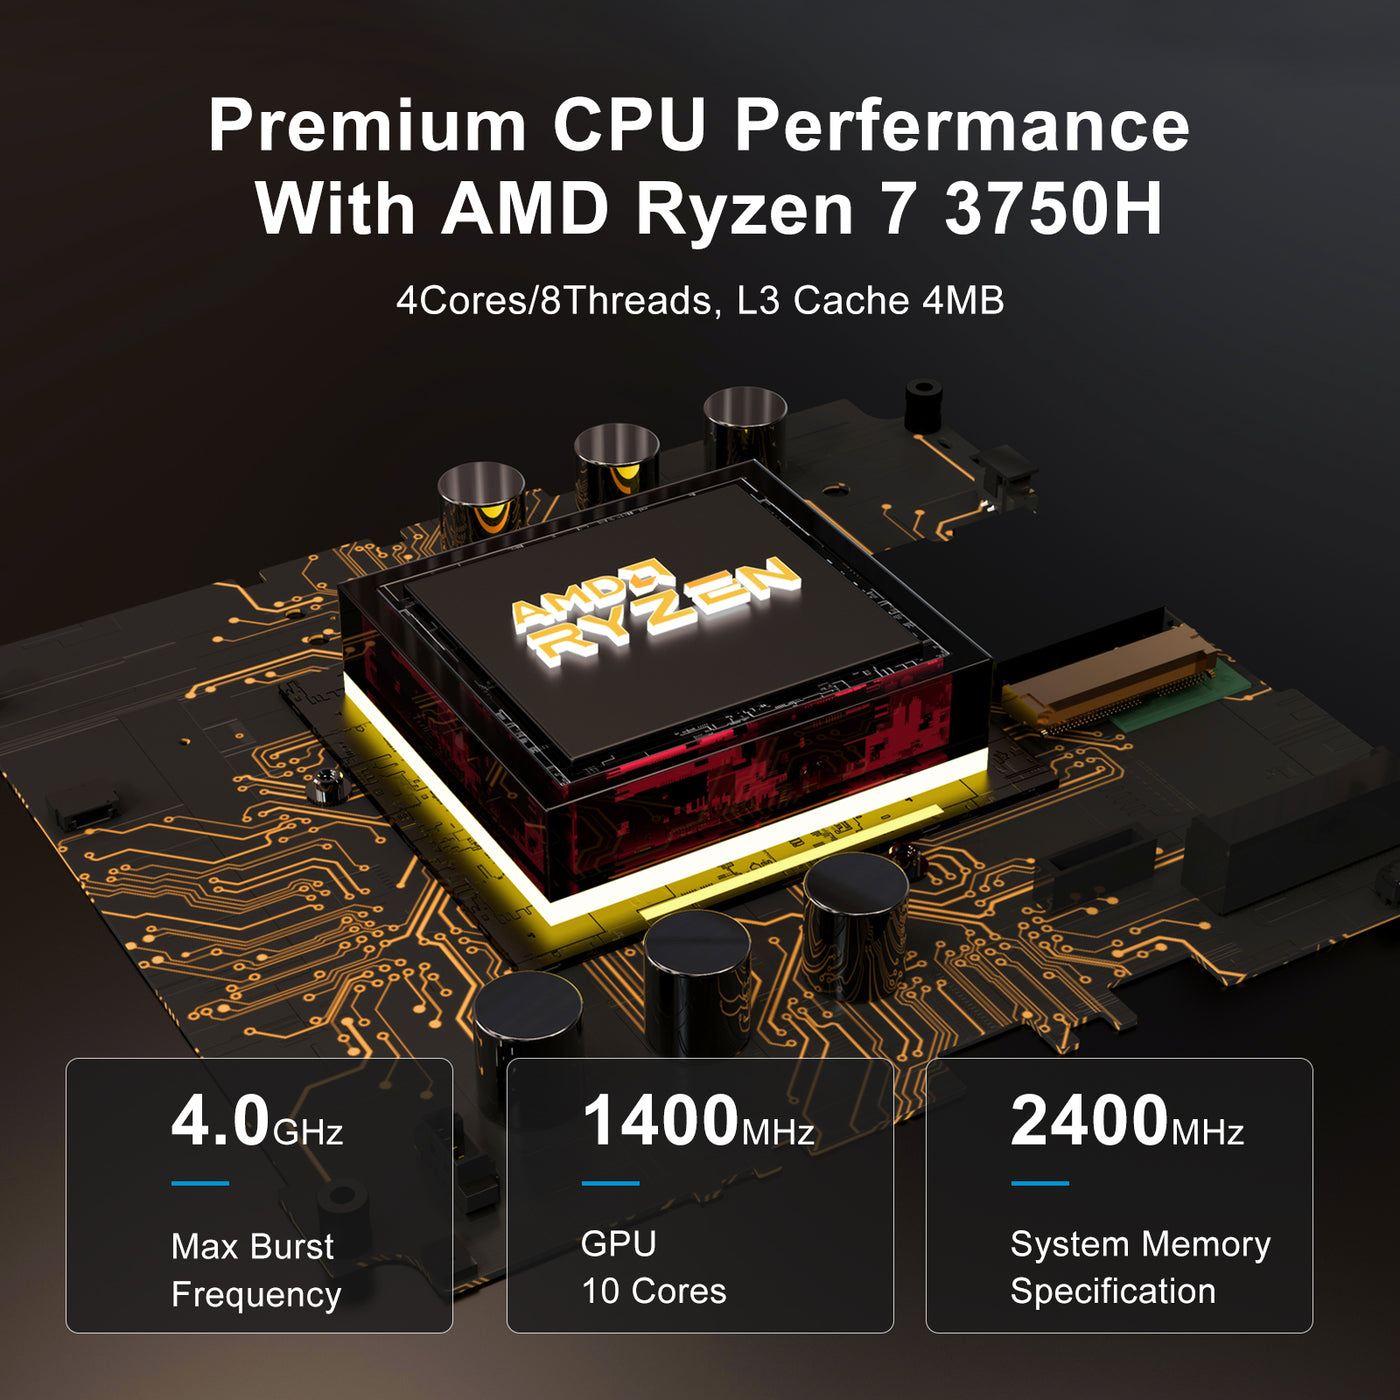 Wo-We Mini PC with AMD Ryzen 7 3750H, Radeon RX Vega 10 Graphics, 8G D –  wo-we